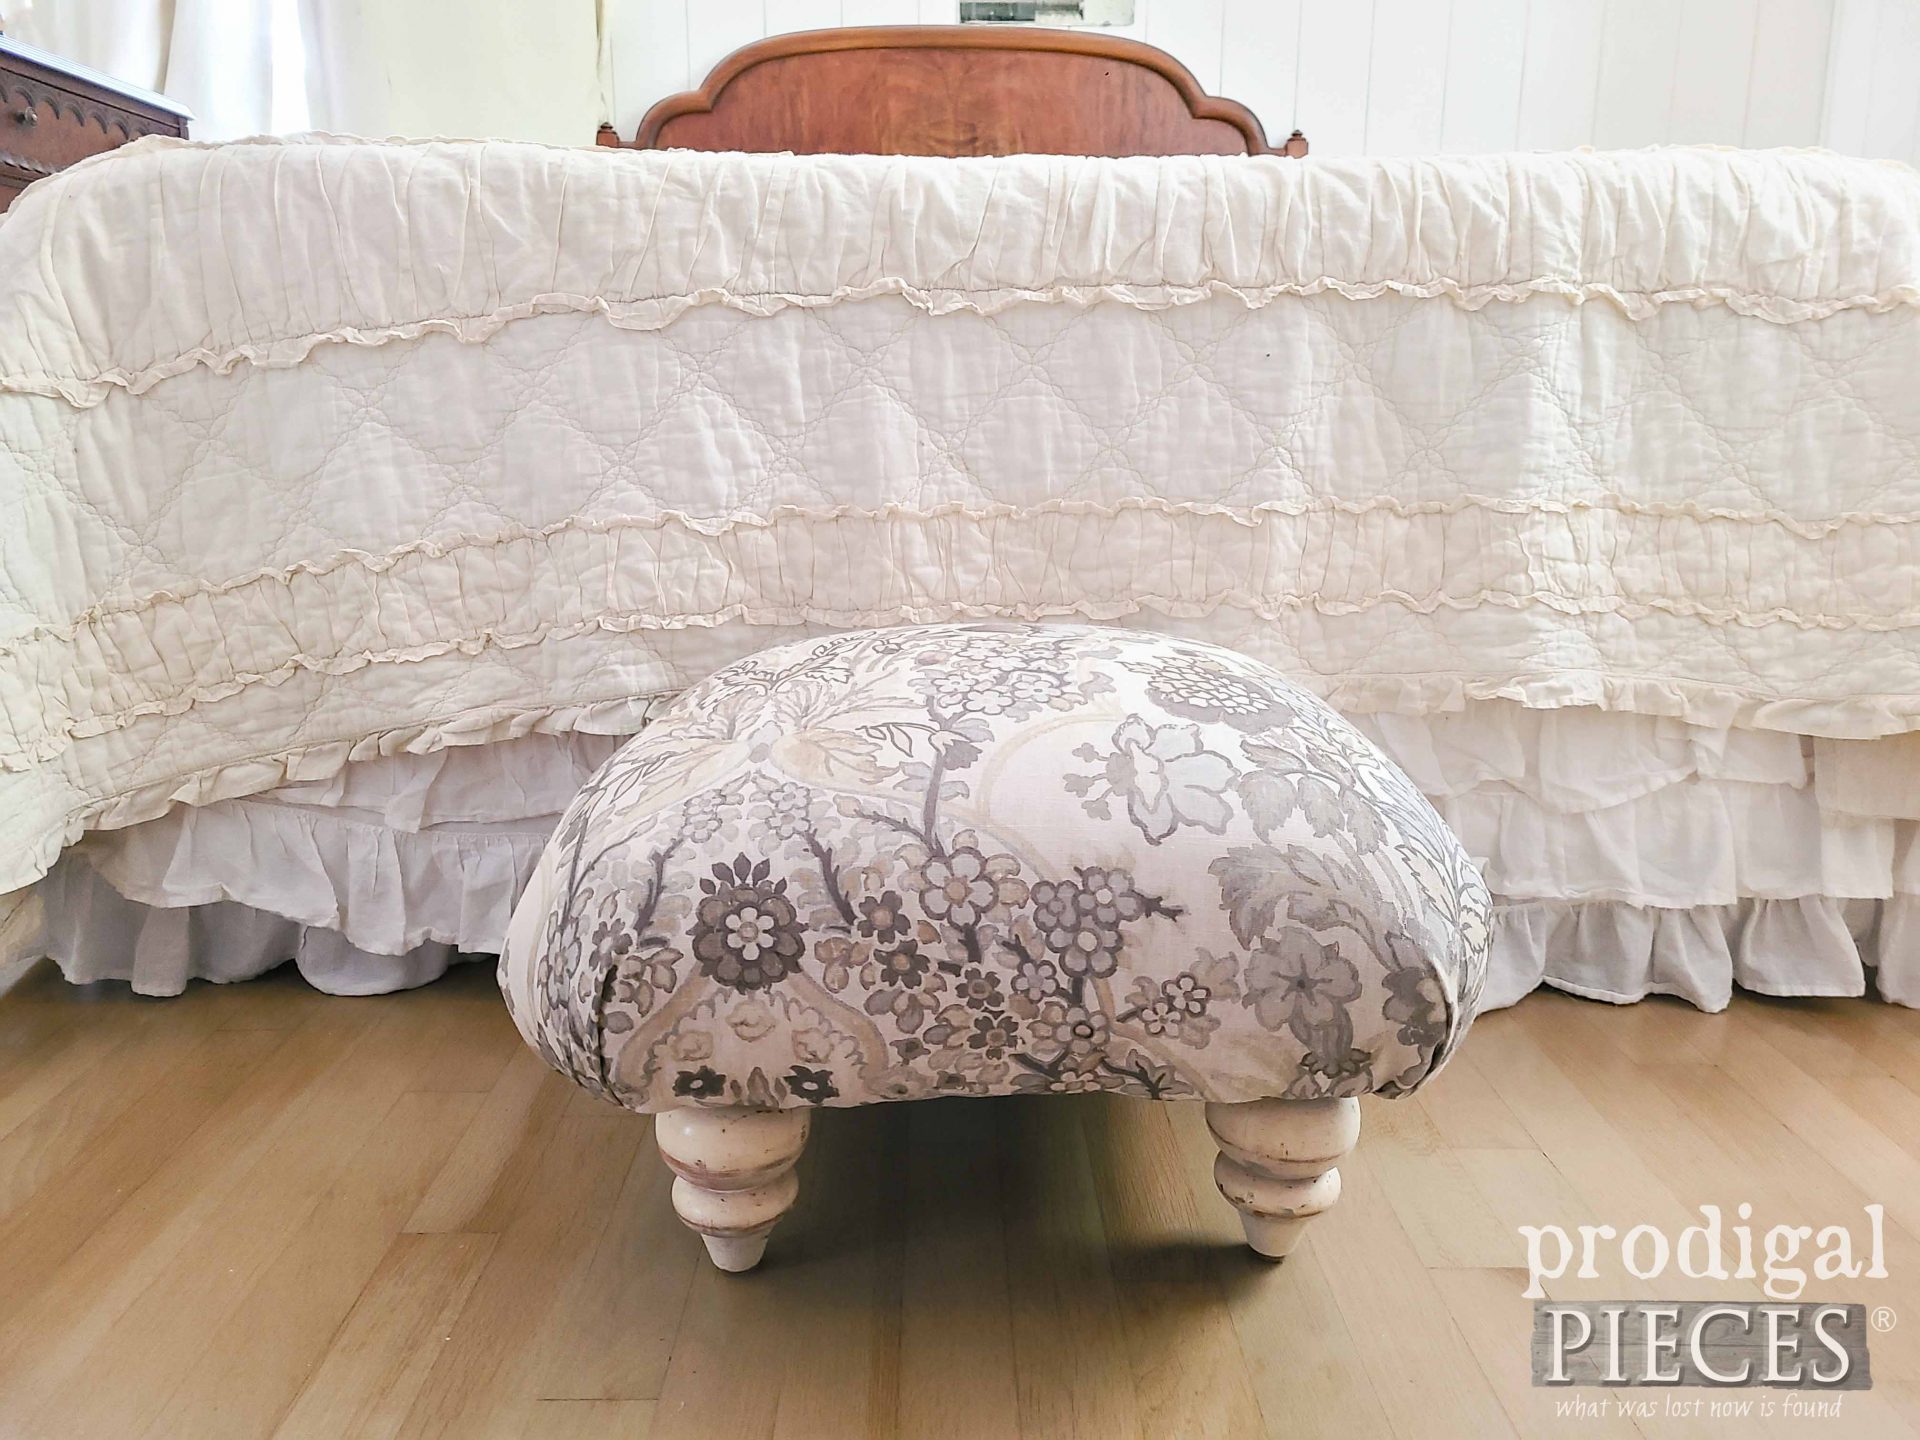 DIY Bedroom Footstool Ottoman made by Larissa of Prodigal Pieces | prodigalpieces.com #prodigalpieces #diy #furniture #home